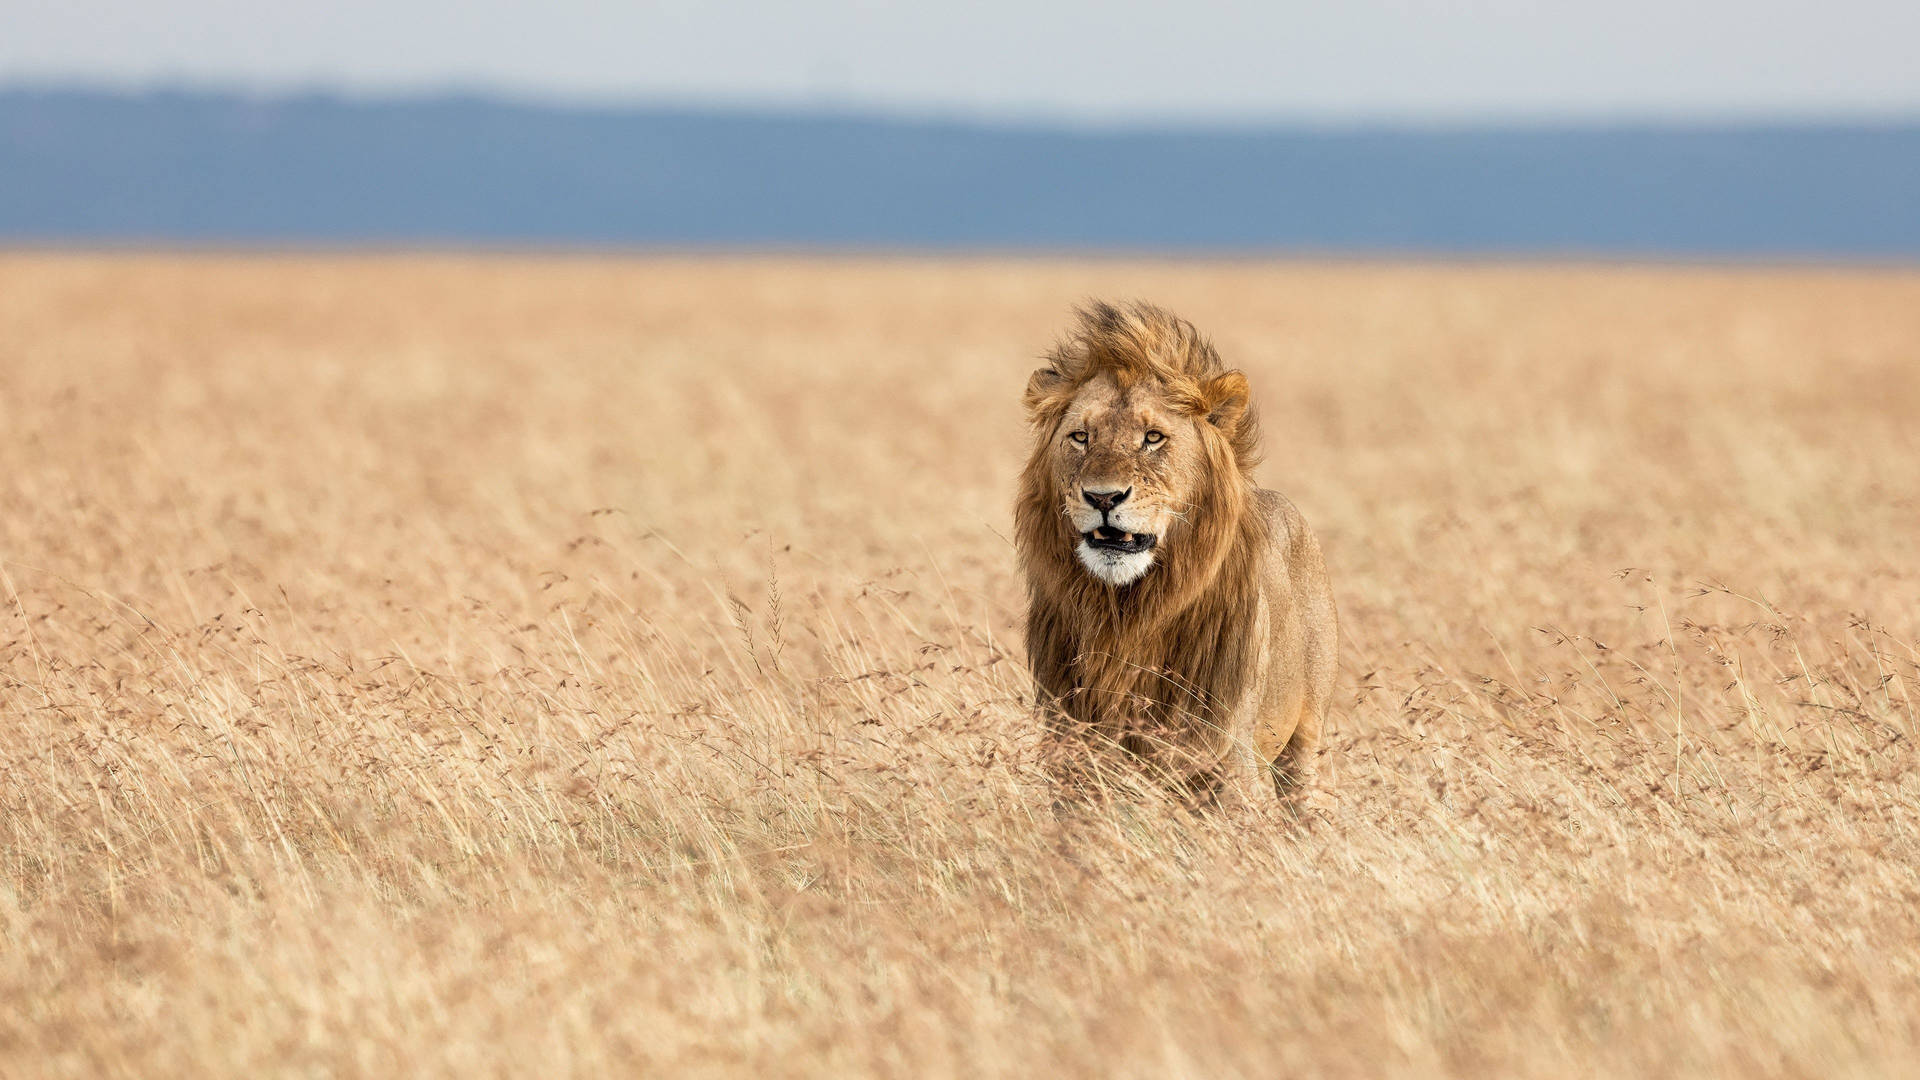 Lion In Africa Focus Shot Wallpaper